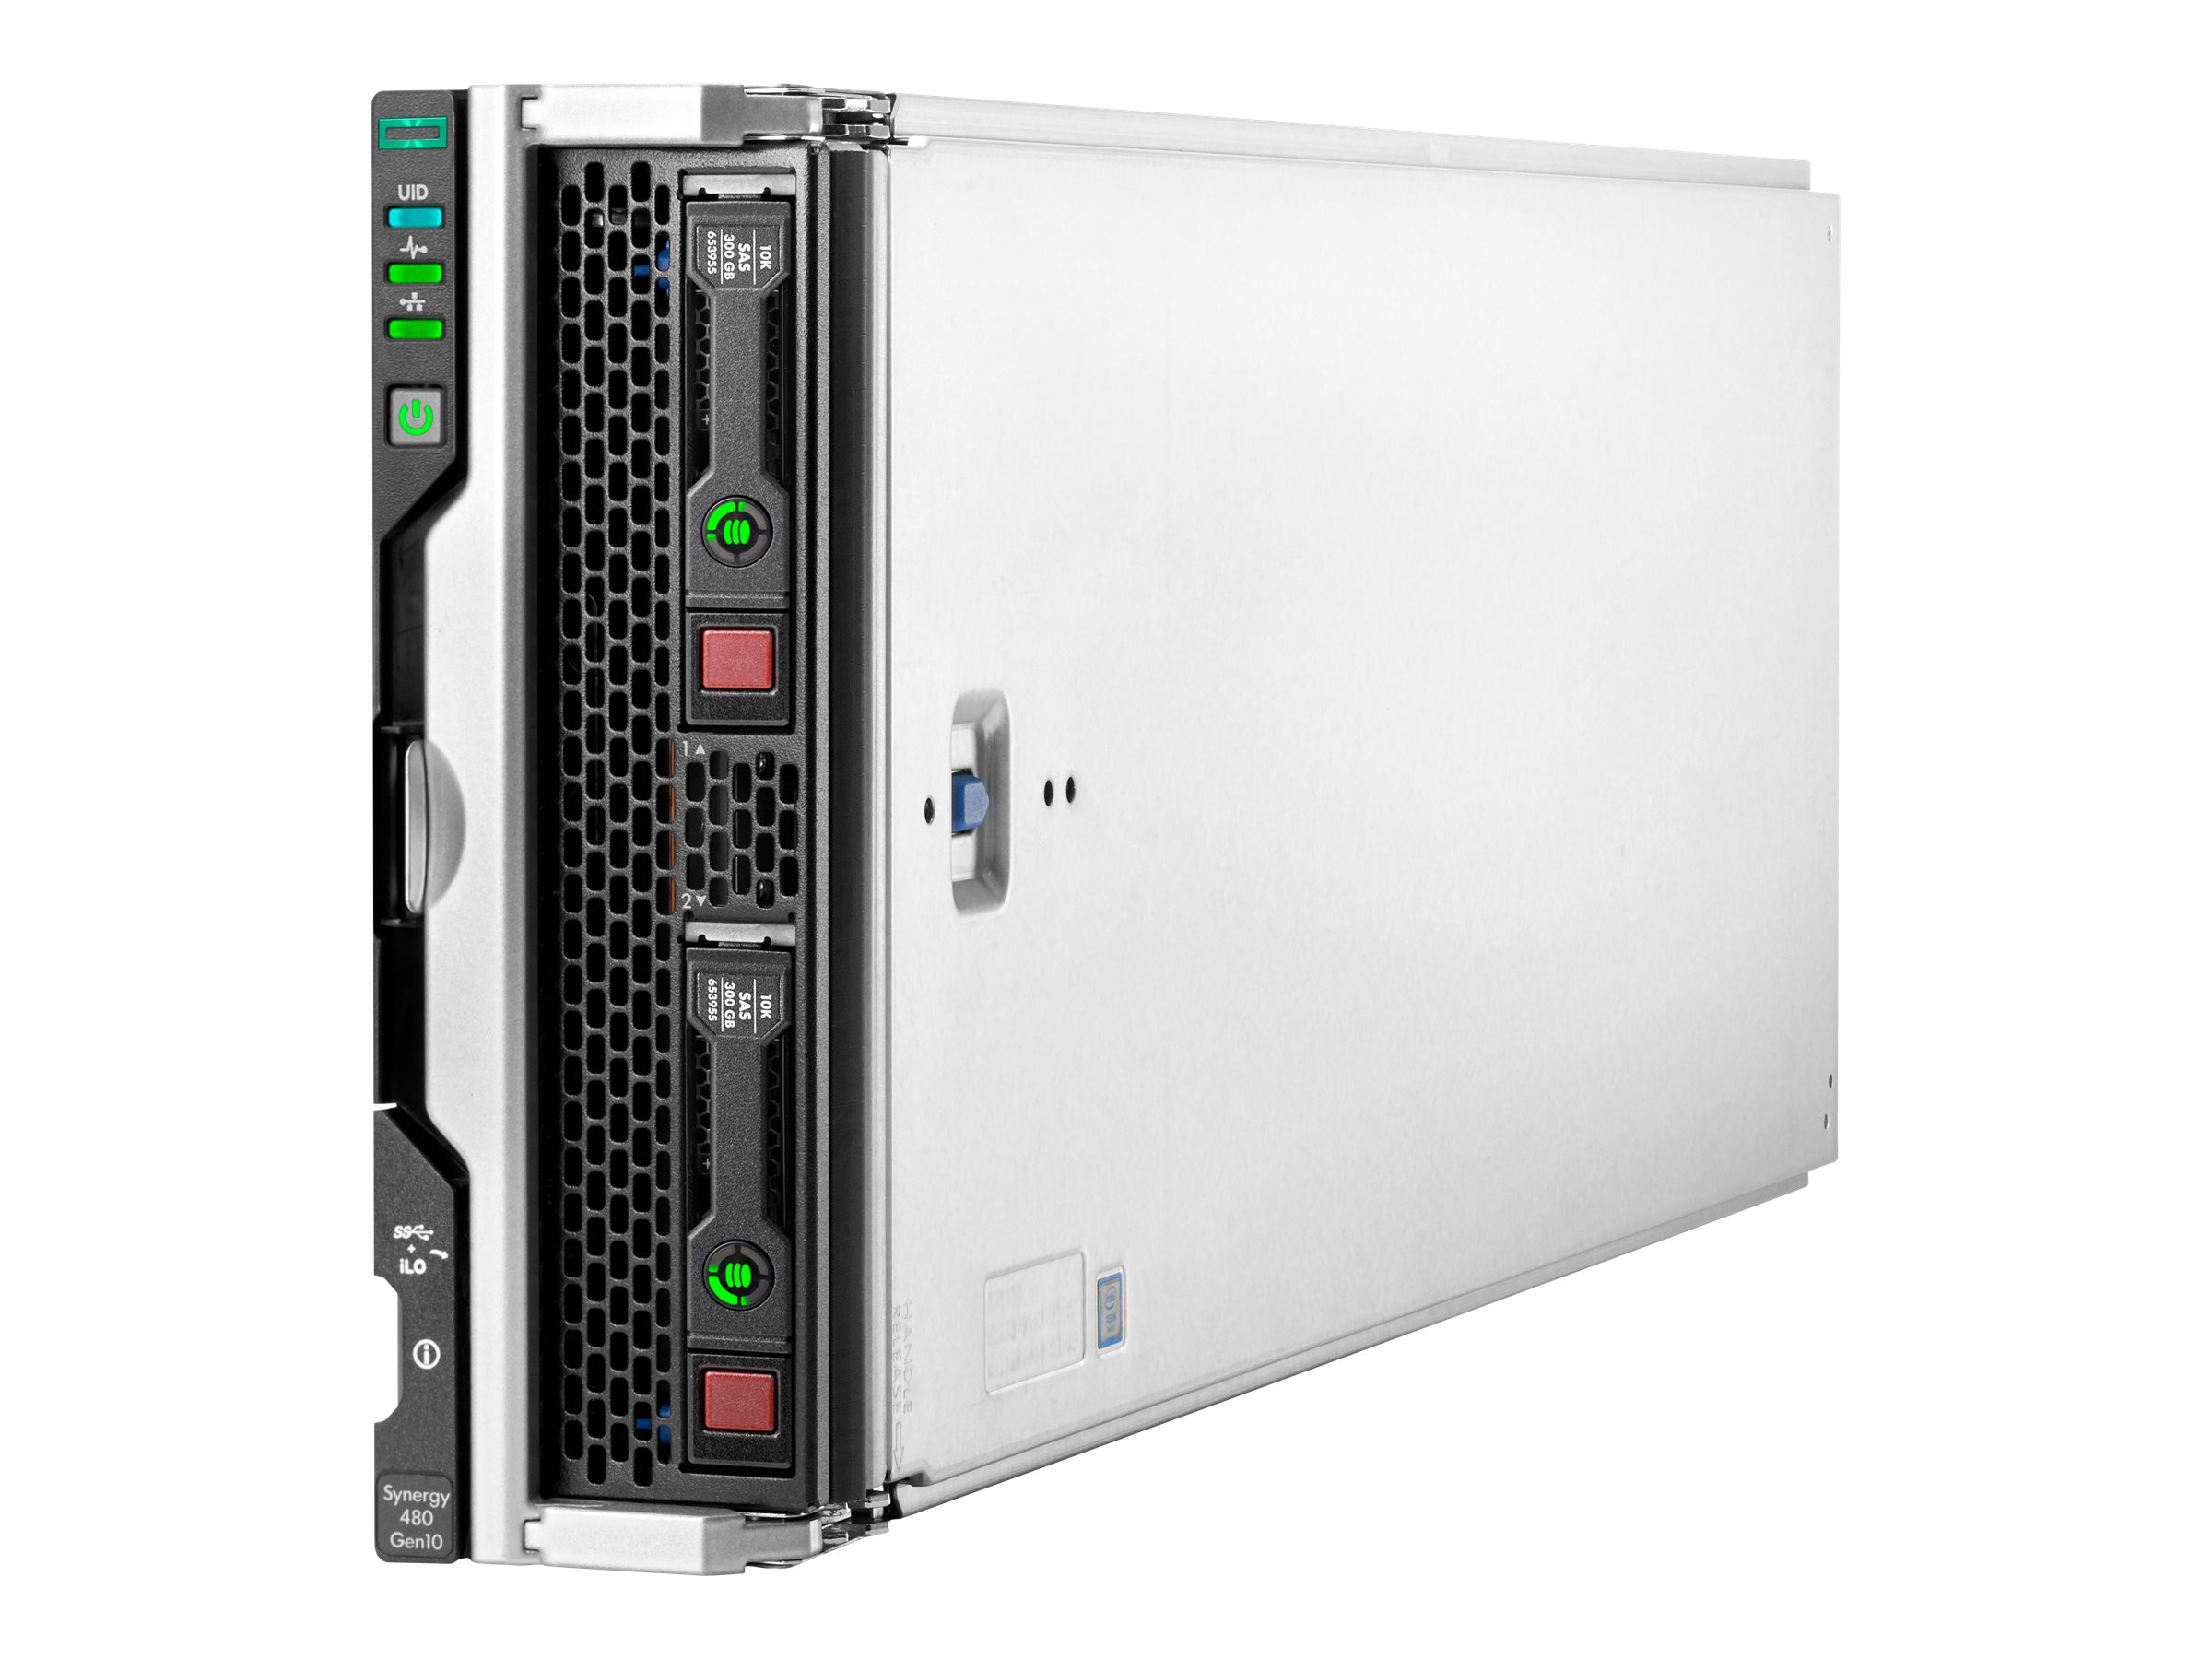 HPE Synergy 480 Gen10 w/o Drives Compute Module - Server - Blade - zweiweg - keine CPU - RAM 0 GB